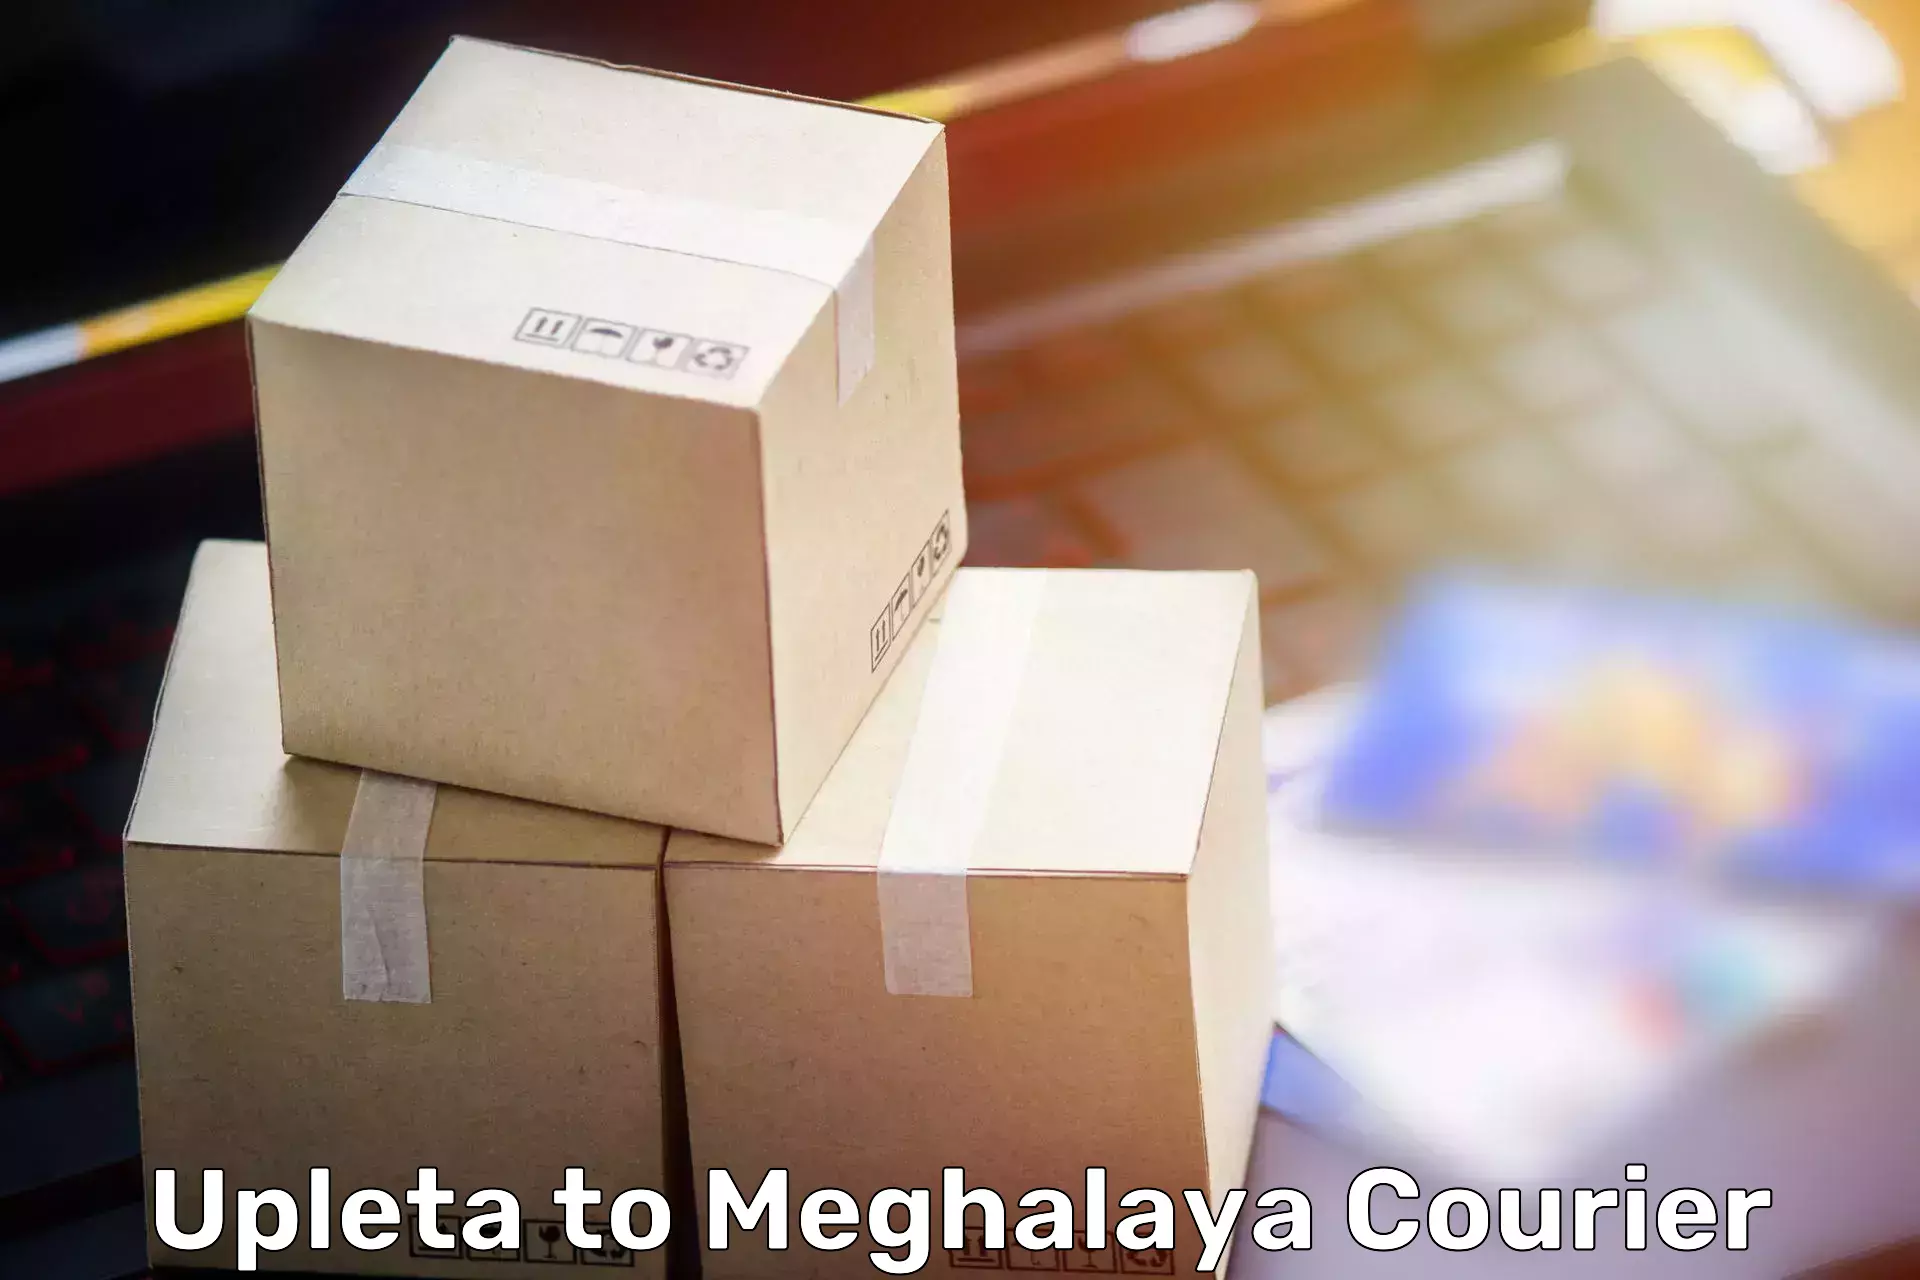 Furniture transport specialists Upleta to Meghalaya